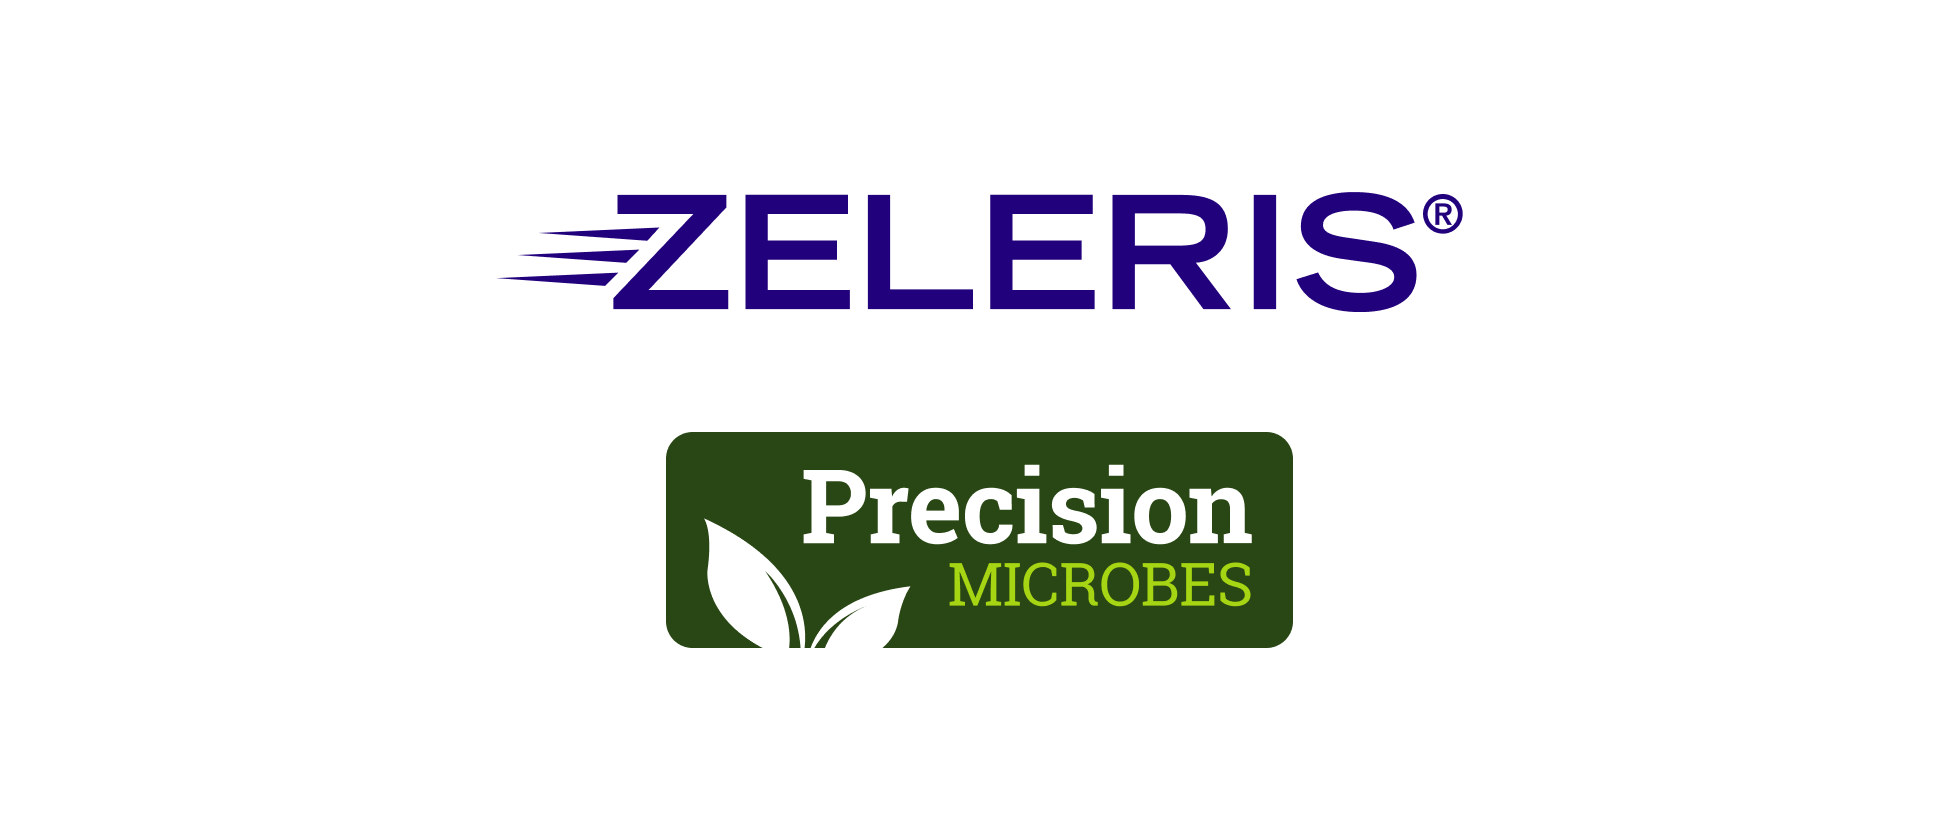 Zeleris &. Precision Microbes logo